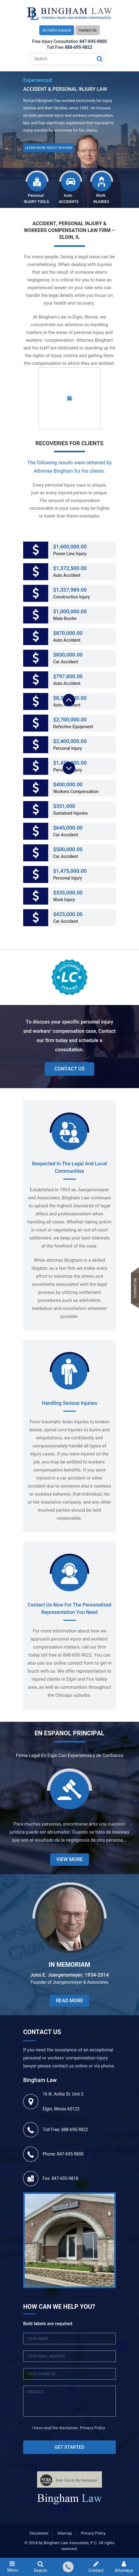 Bingham Law / Juergensmeyer & Associates, P.C. - Elgin IL Lawyers